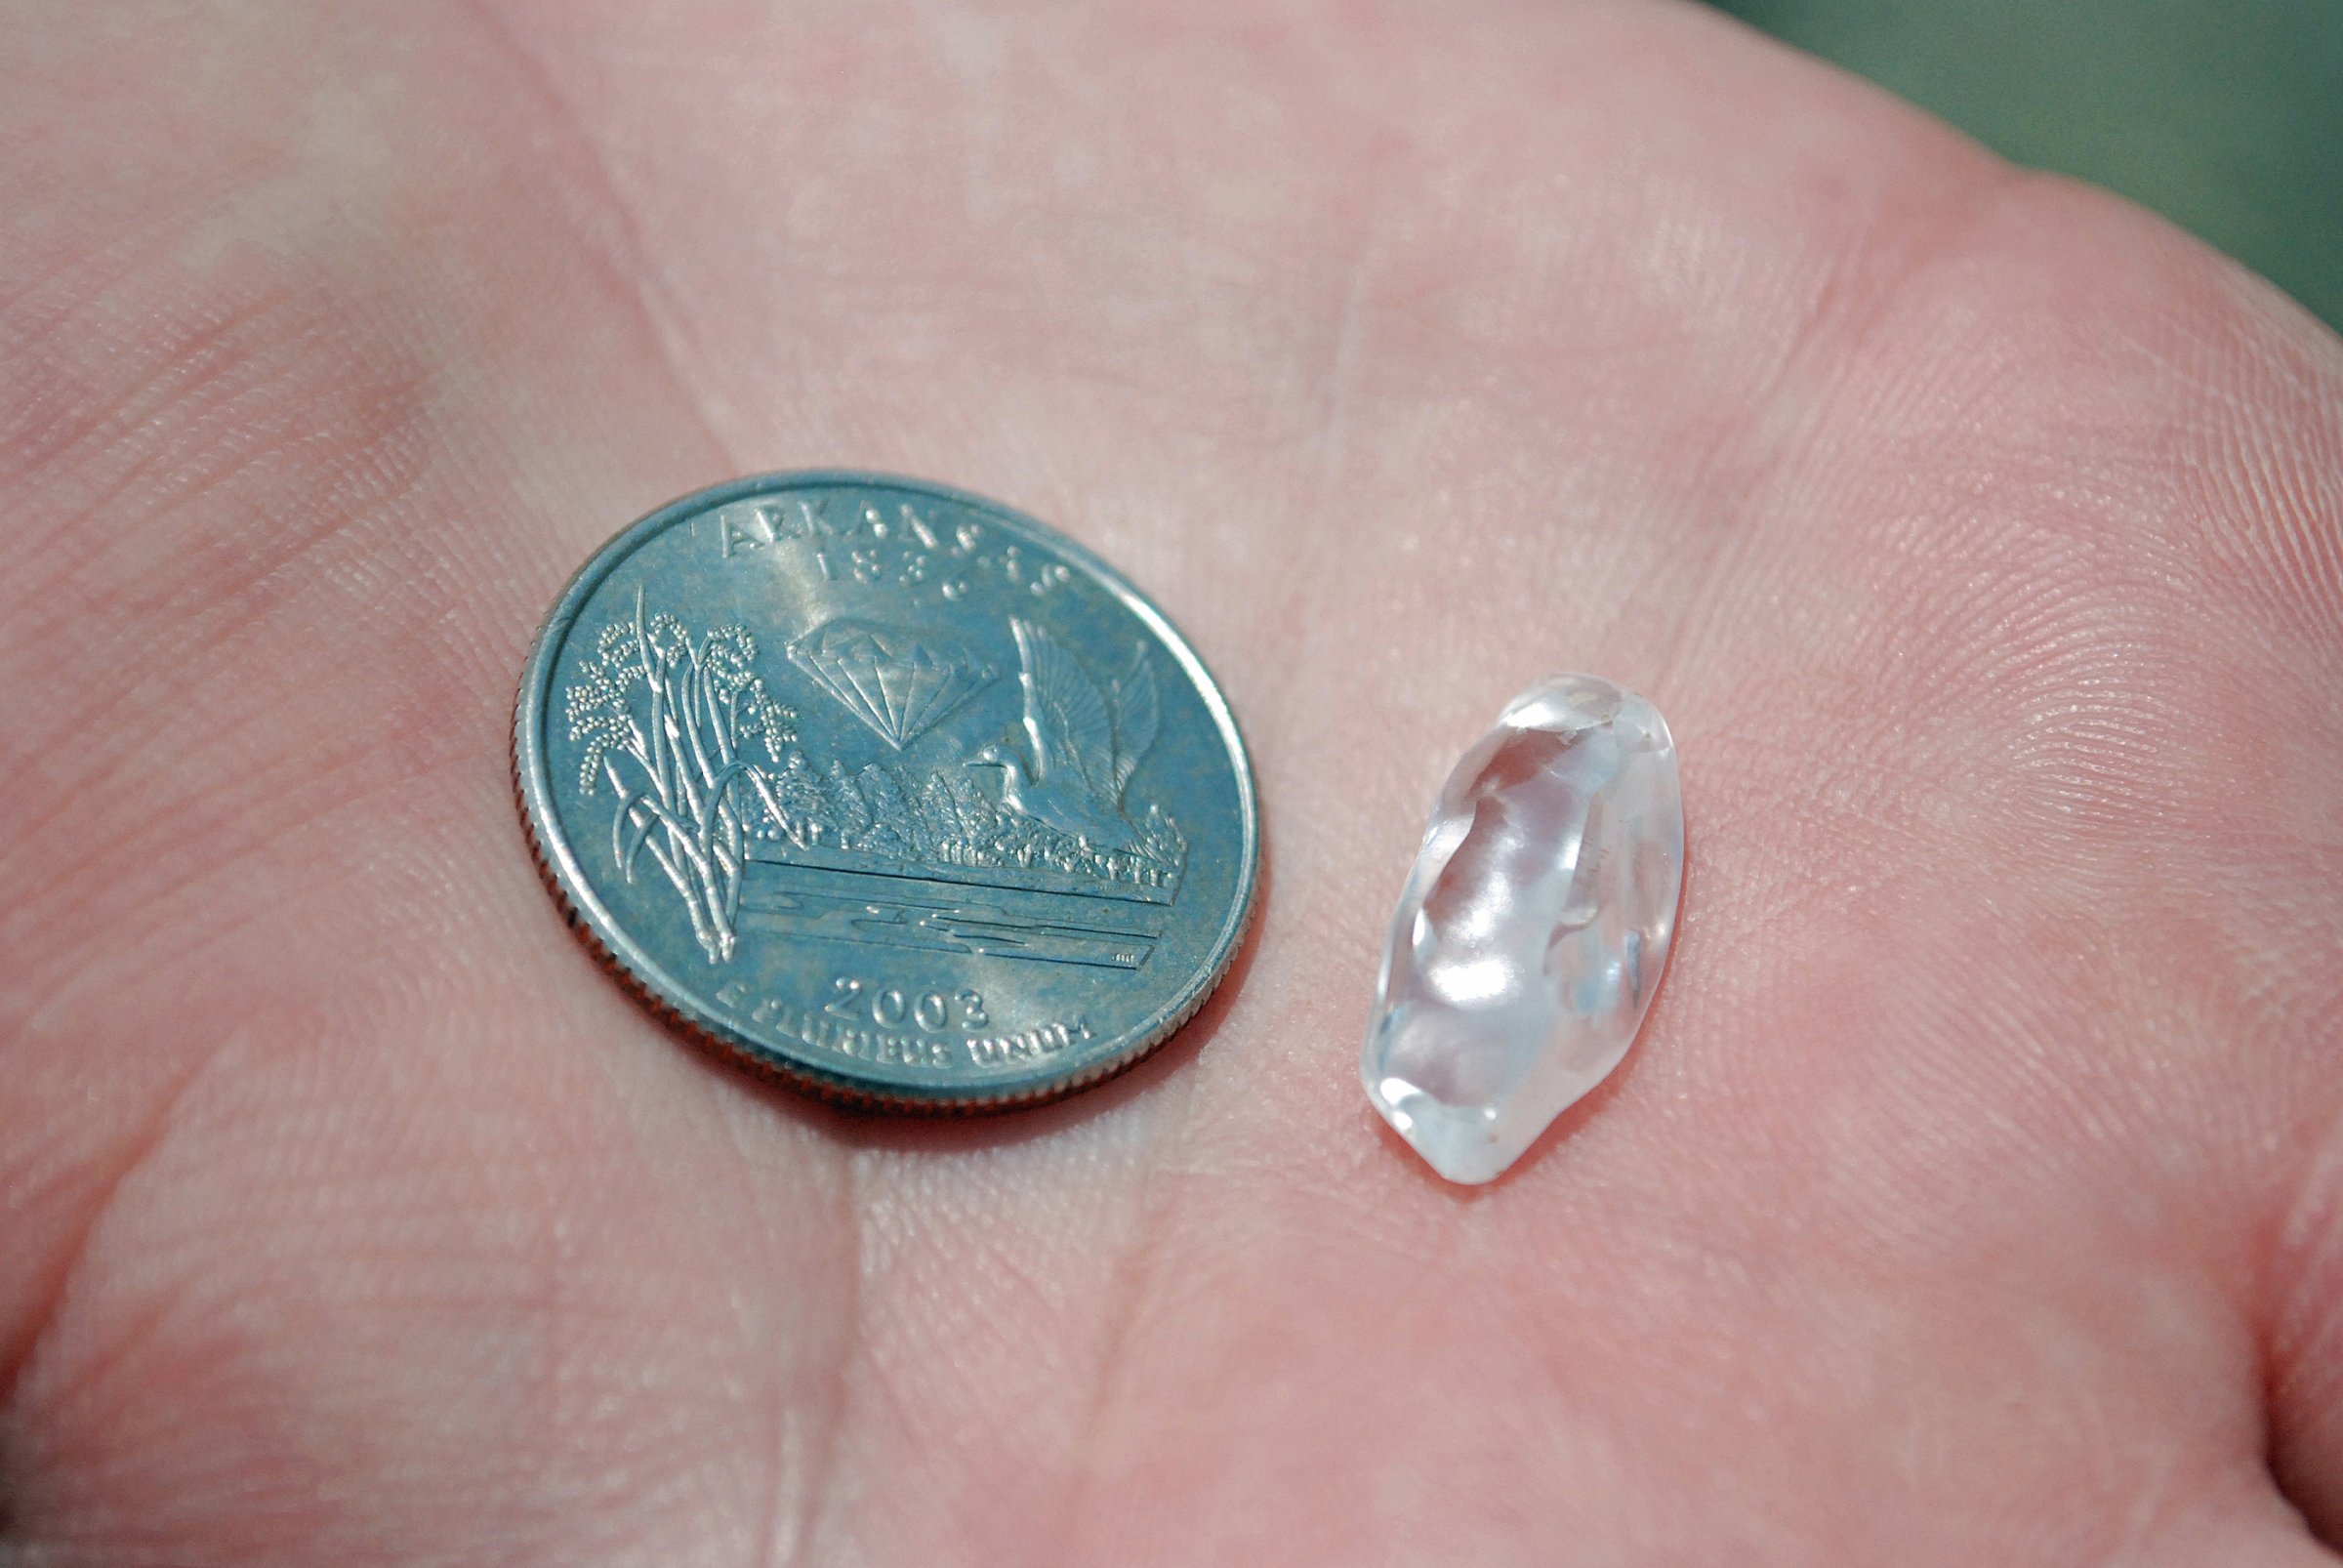 8.52-carat diamond Arkansas quarter